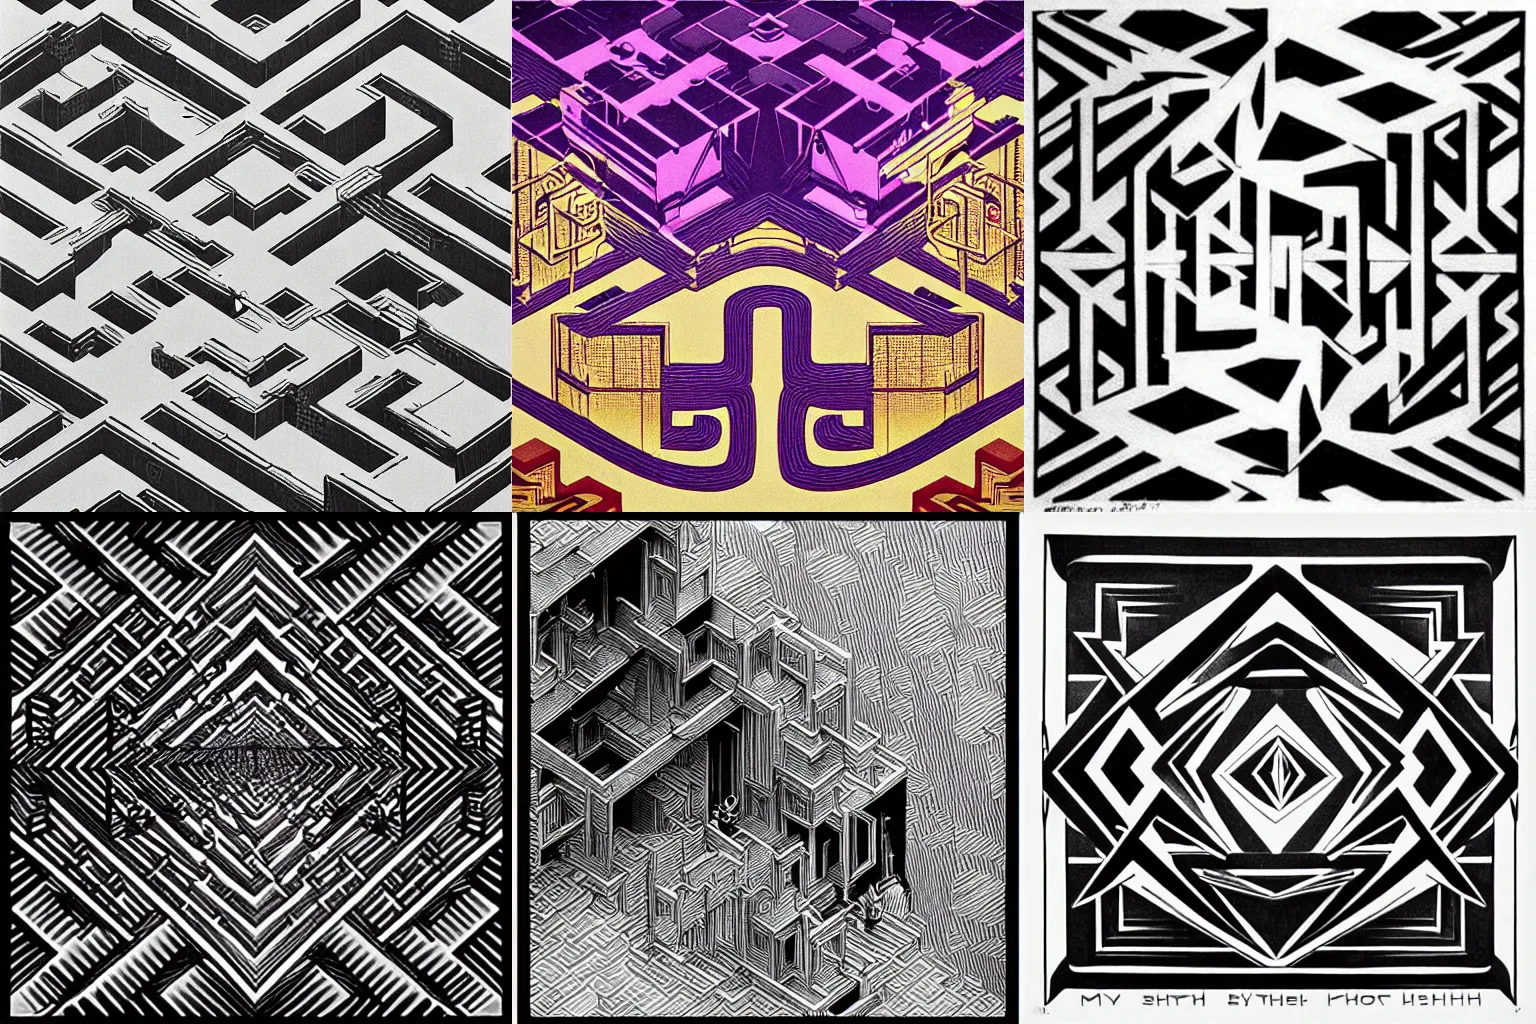 Prompt: Synthwave art by M.C. Escher